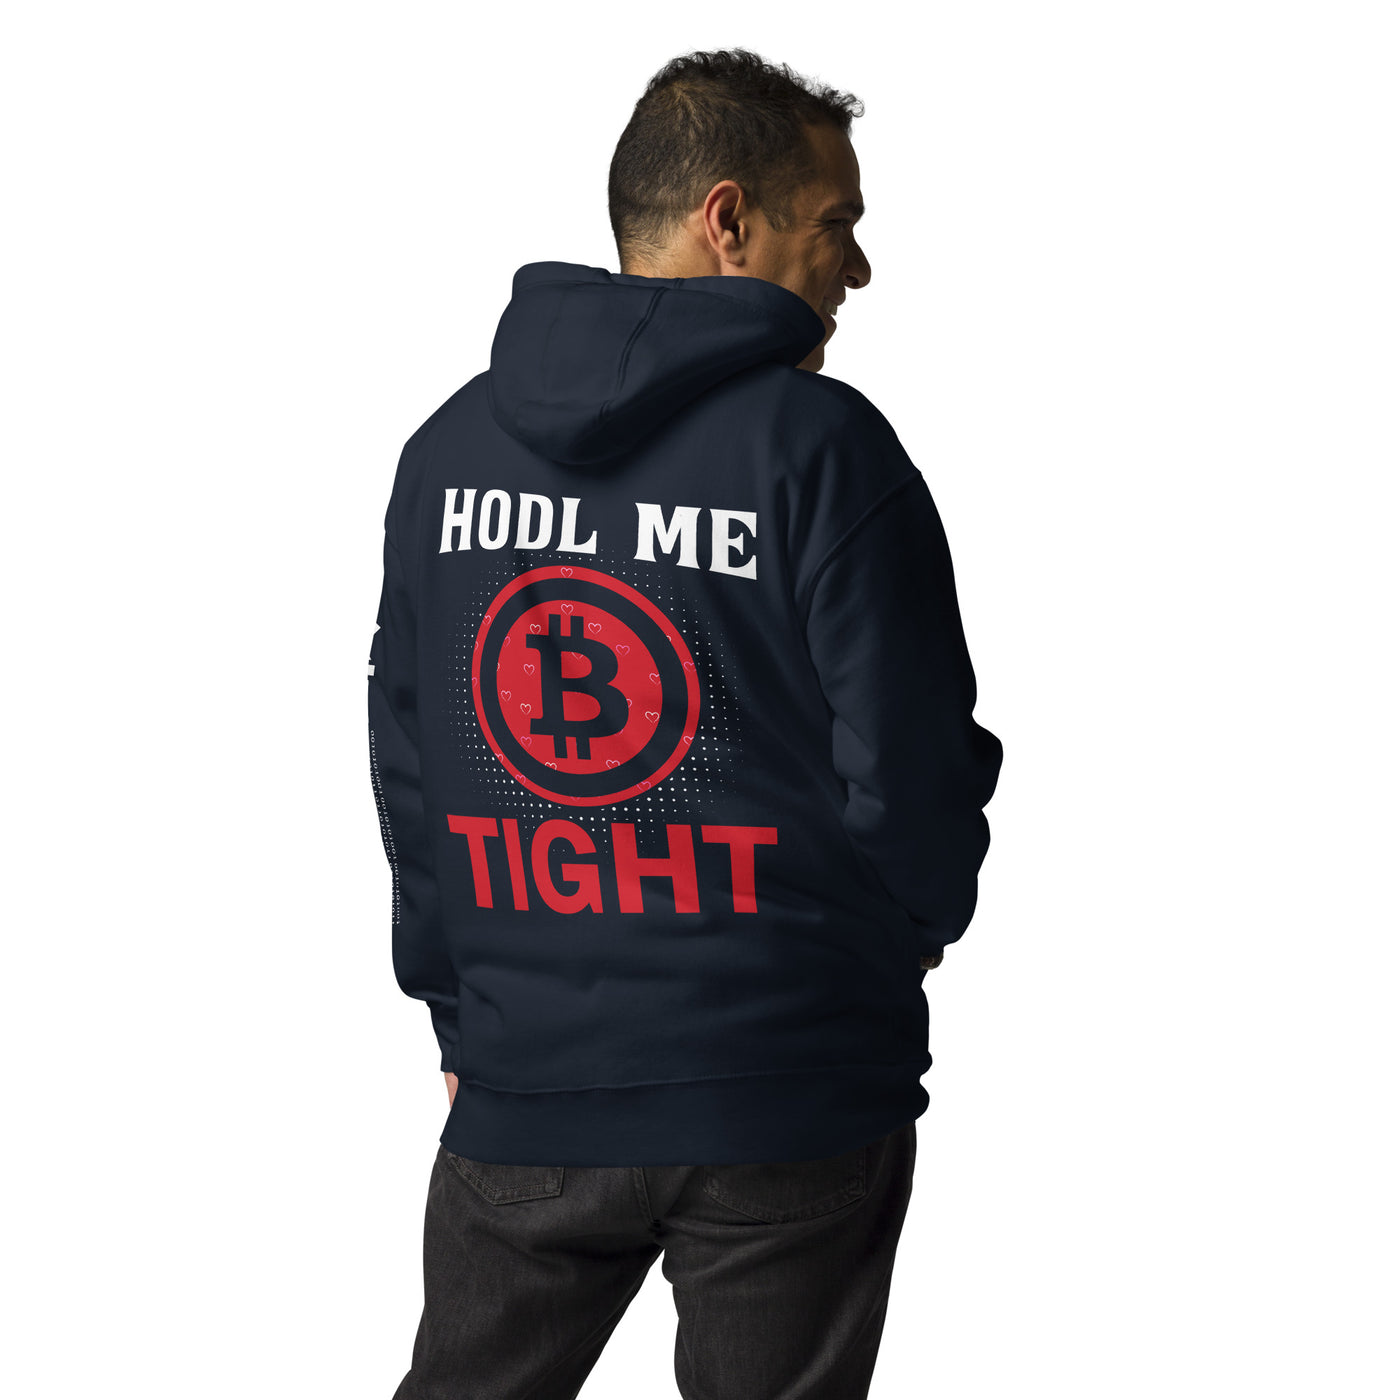 Bitcoin: HODL Me Tight - Unisex Hoodie ( Back Print )